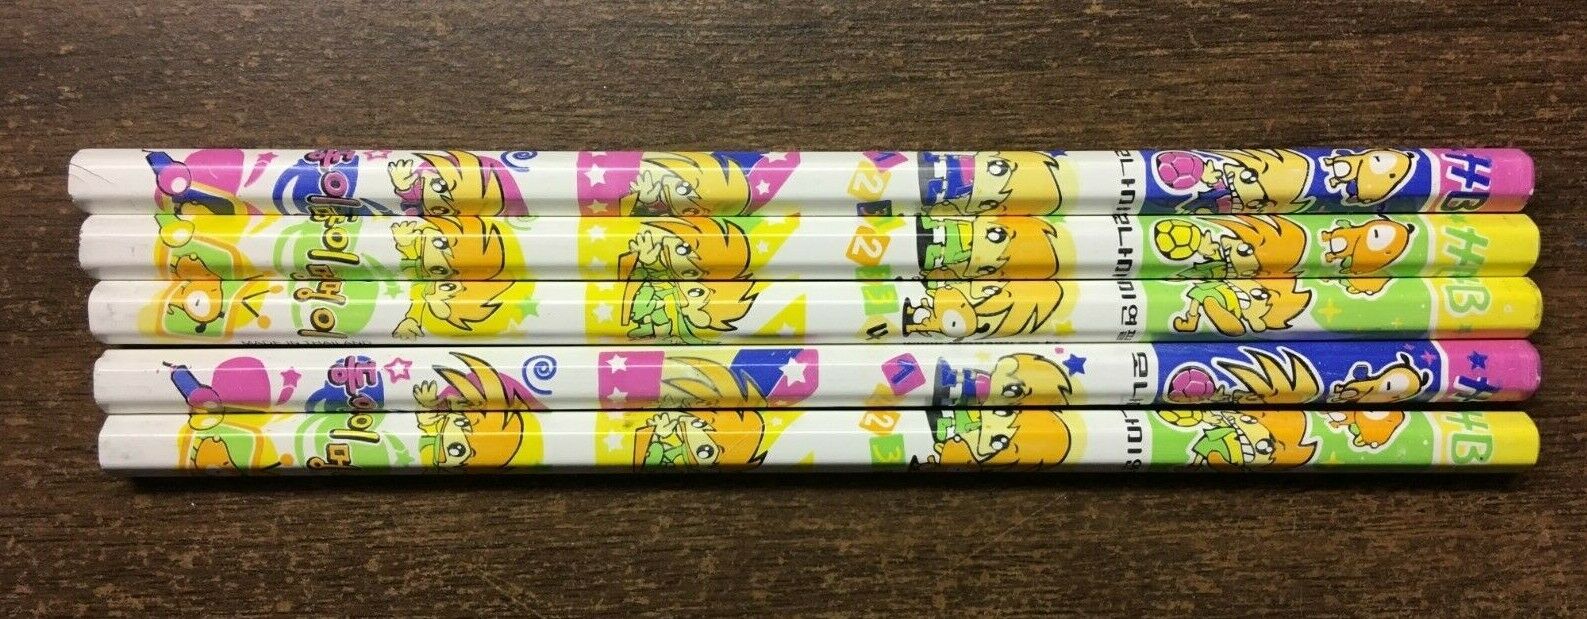 Lot of 6 MONAMI South Korea HB pencils unsharpened